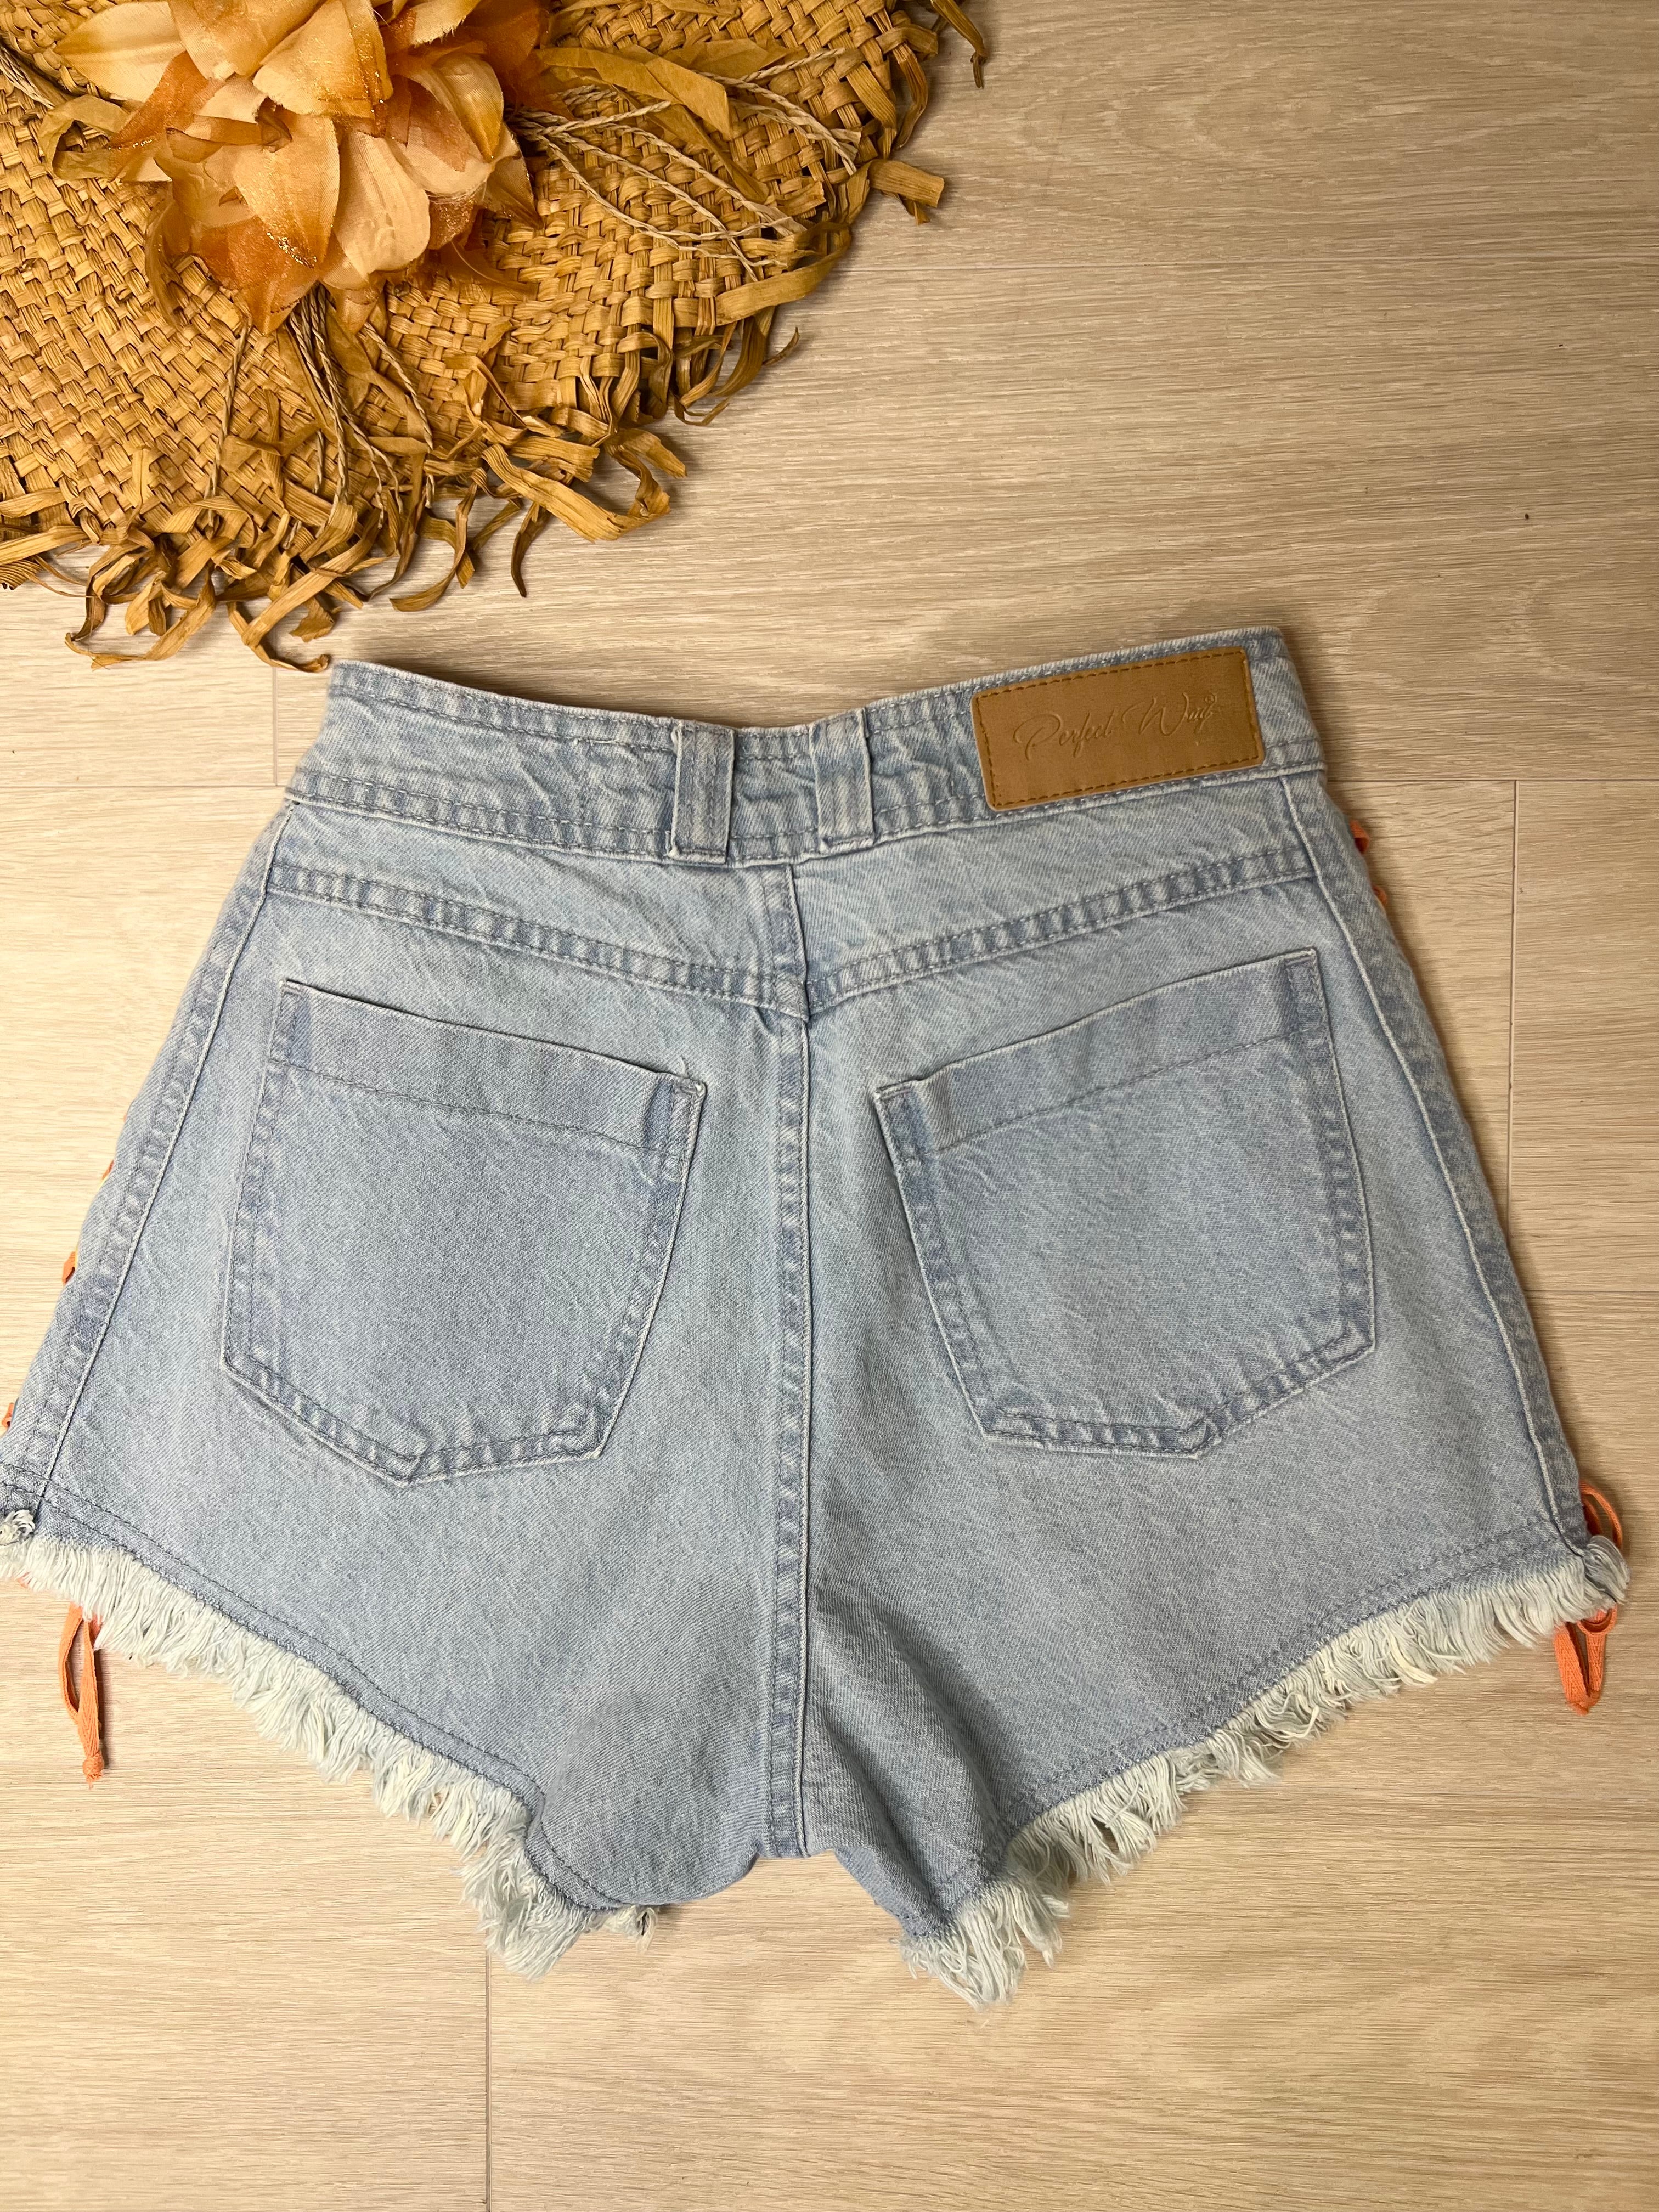 LPA214255 - Shorts Jeans Abertura Perfect Way